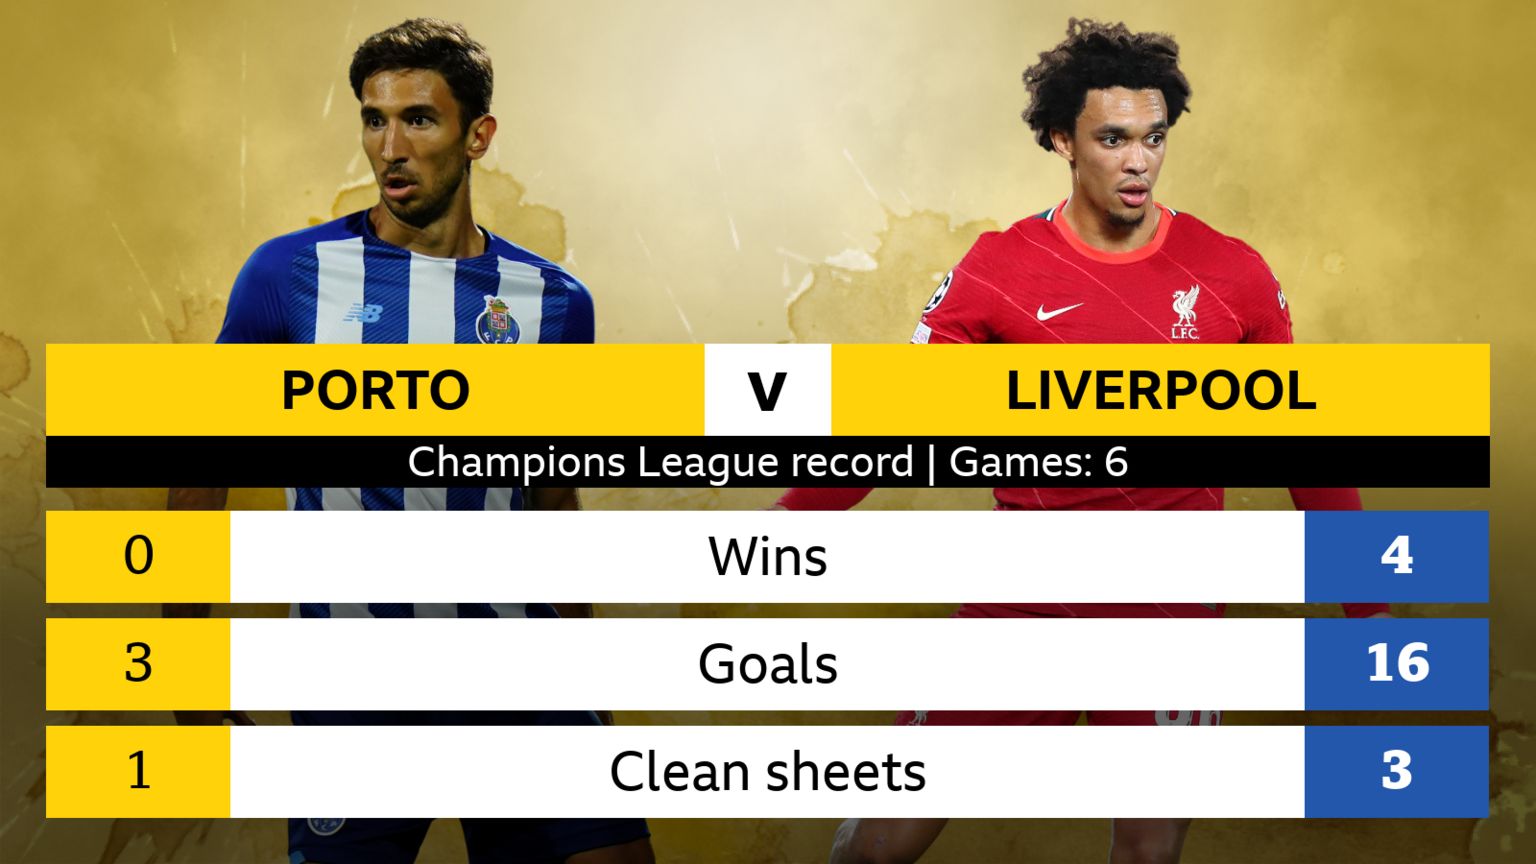 Porto v Liverpool (Champions League record, six games played): Porto - 0 wins, 3 goals, 1 clean sheet. Liverpool - 4 wins, 16 goals, 3 clean sheets